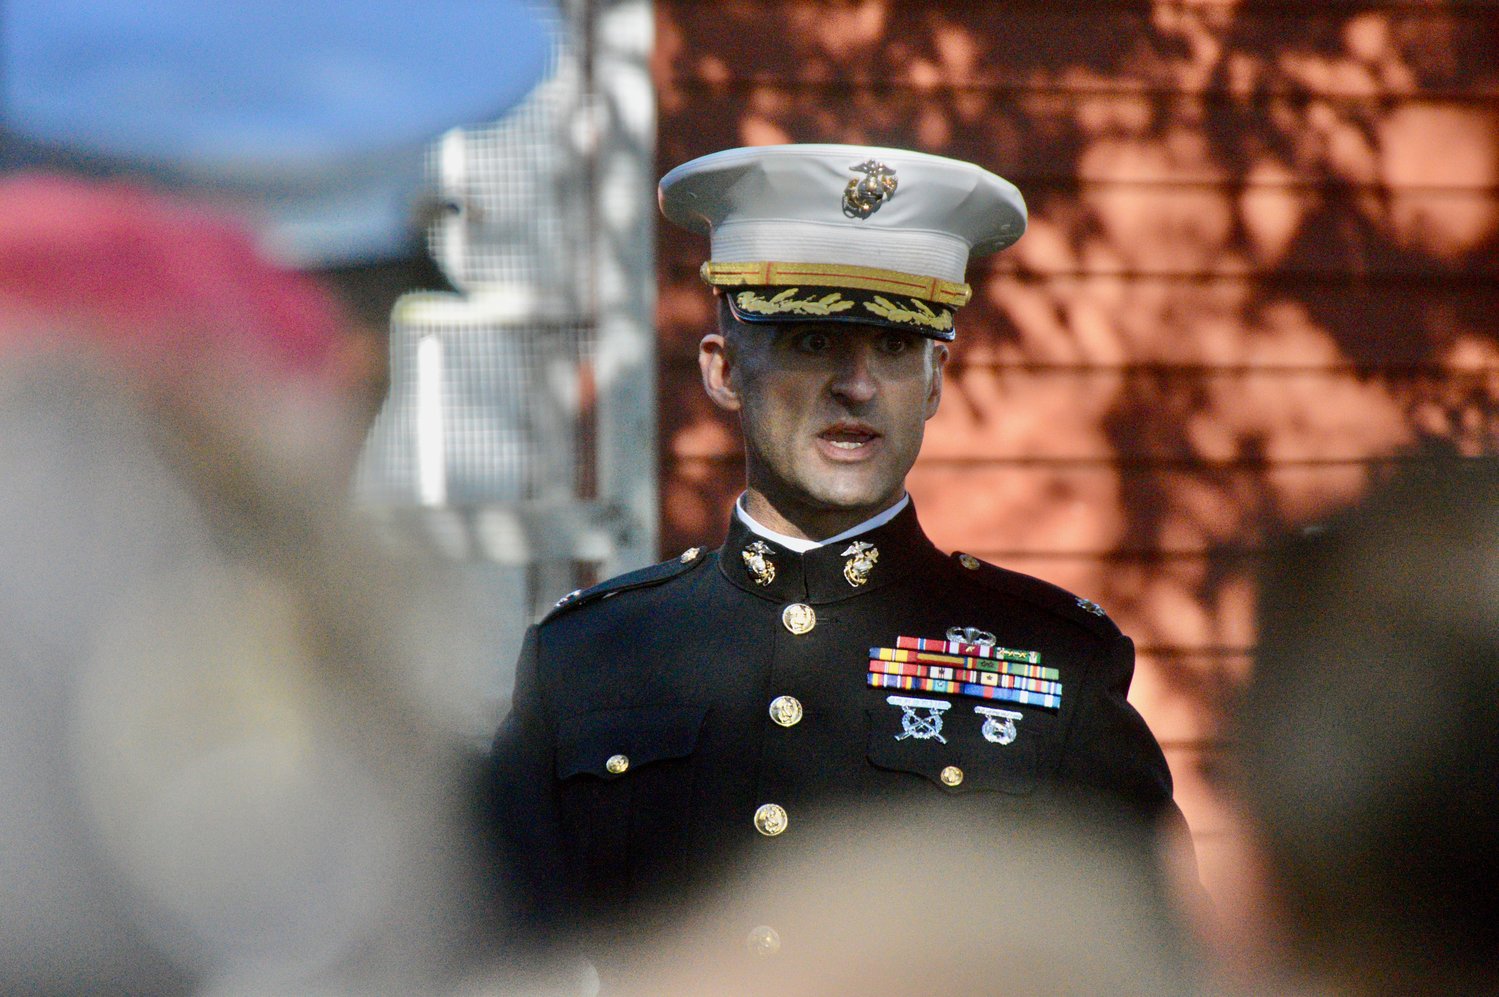 Lt. Col. Scott Stephan, USMC, was the guest speaker for the memorial service.